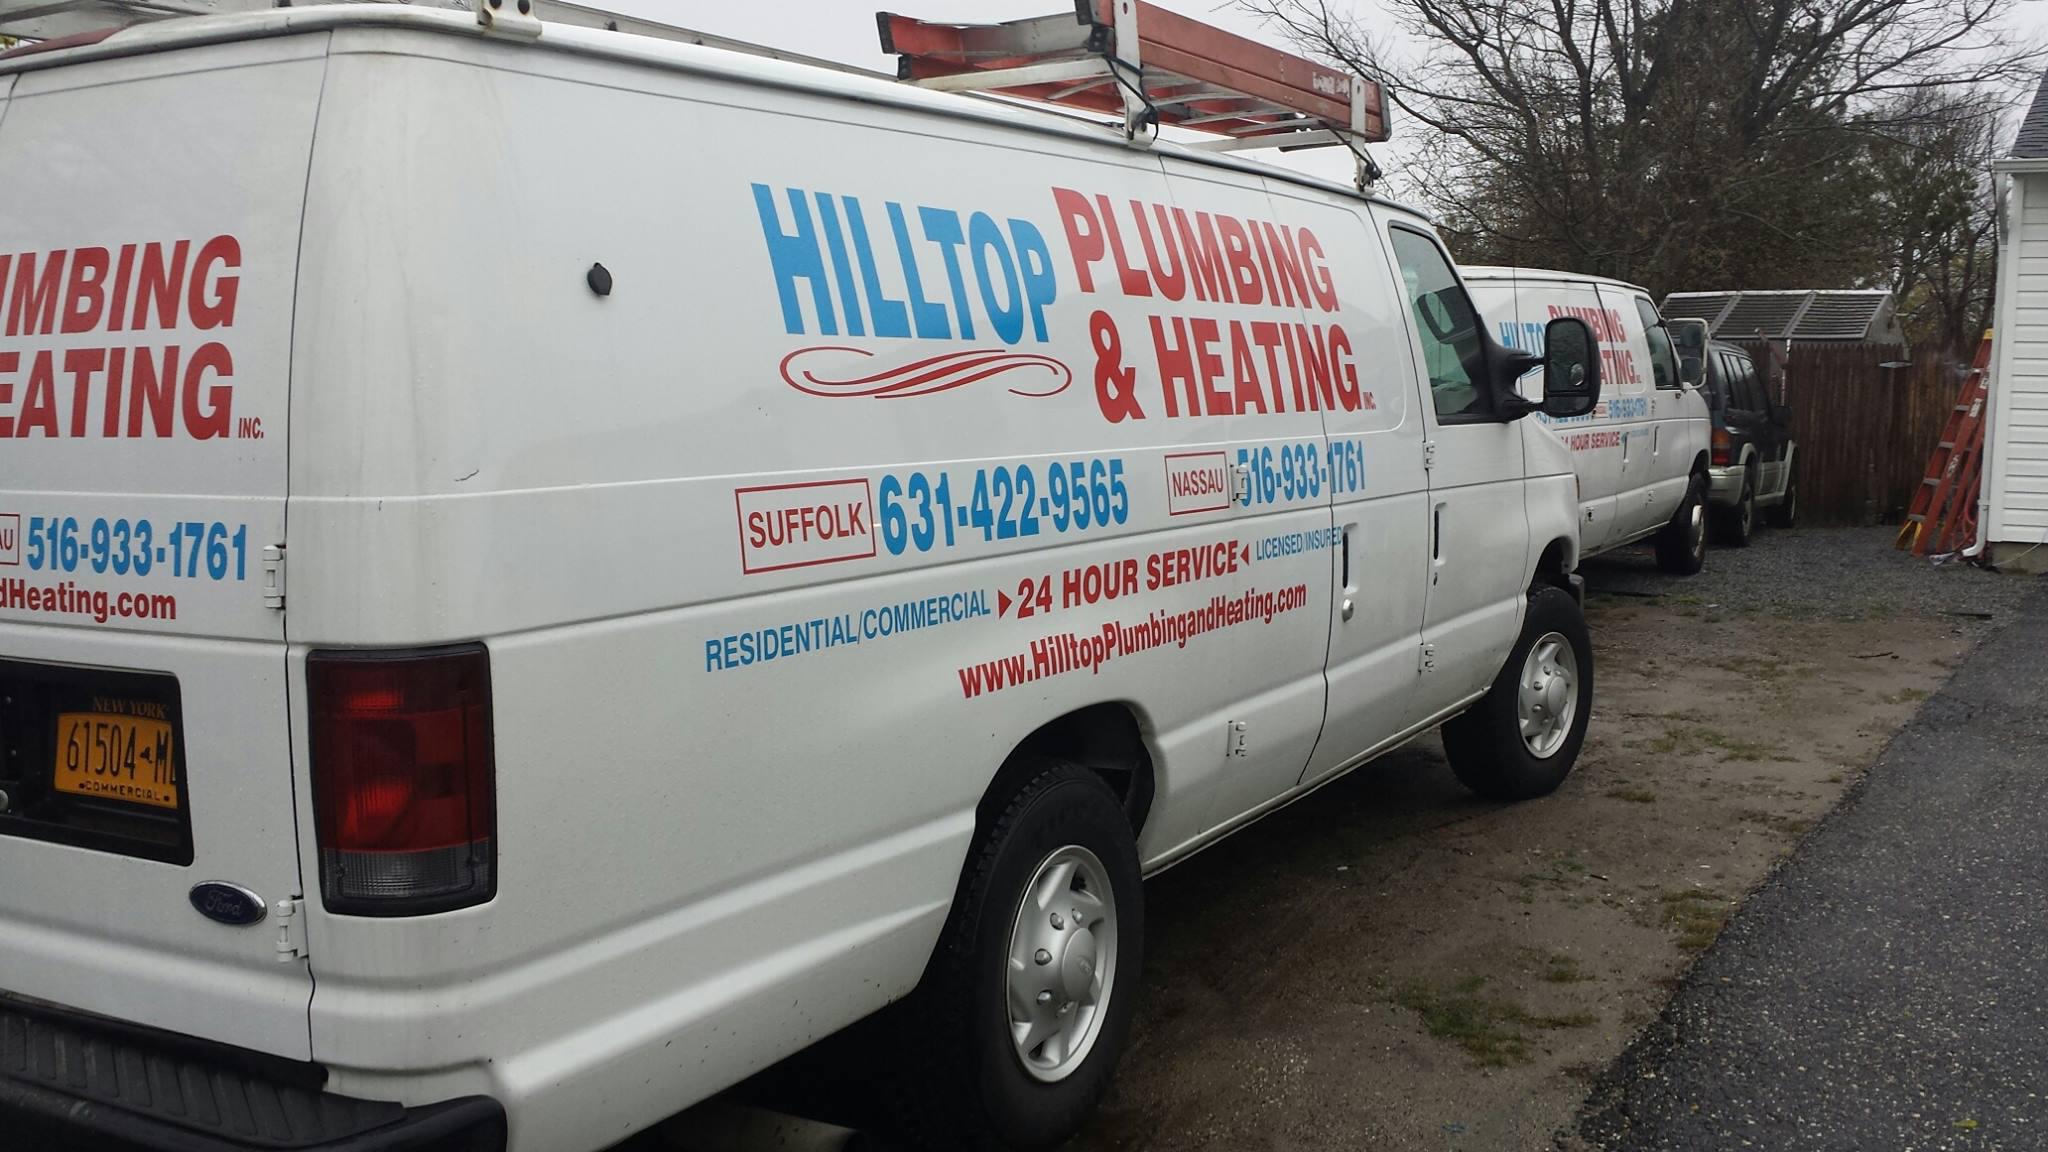 Call our certified technicians for your plumbing and heating needs! Hilltop Plumbing & Heating Bellport (631)422-9565